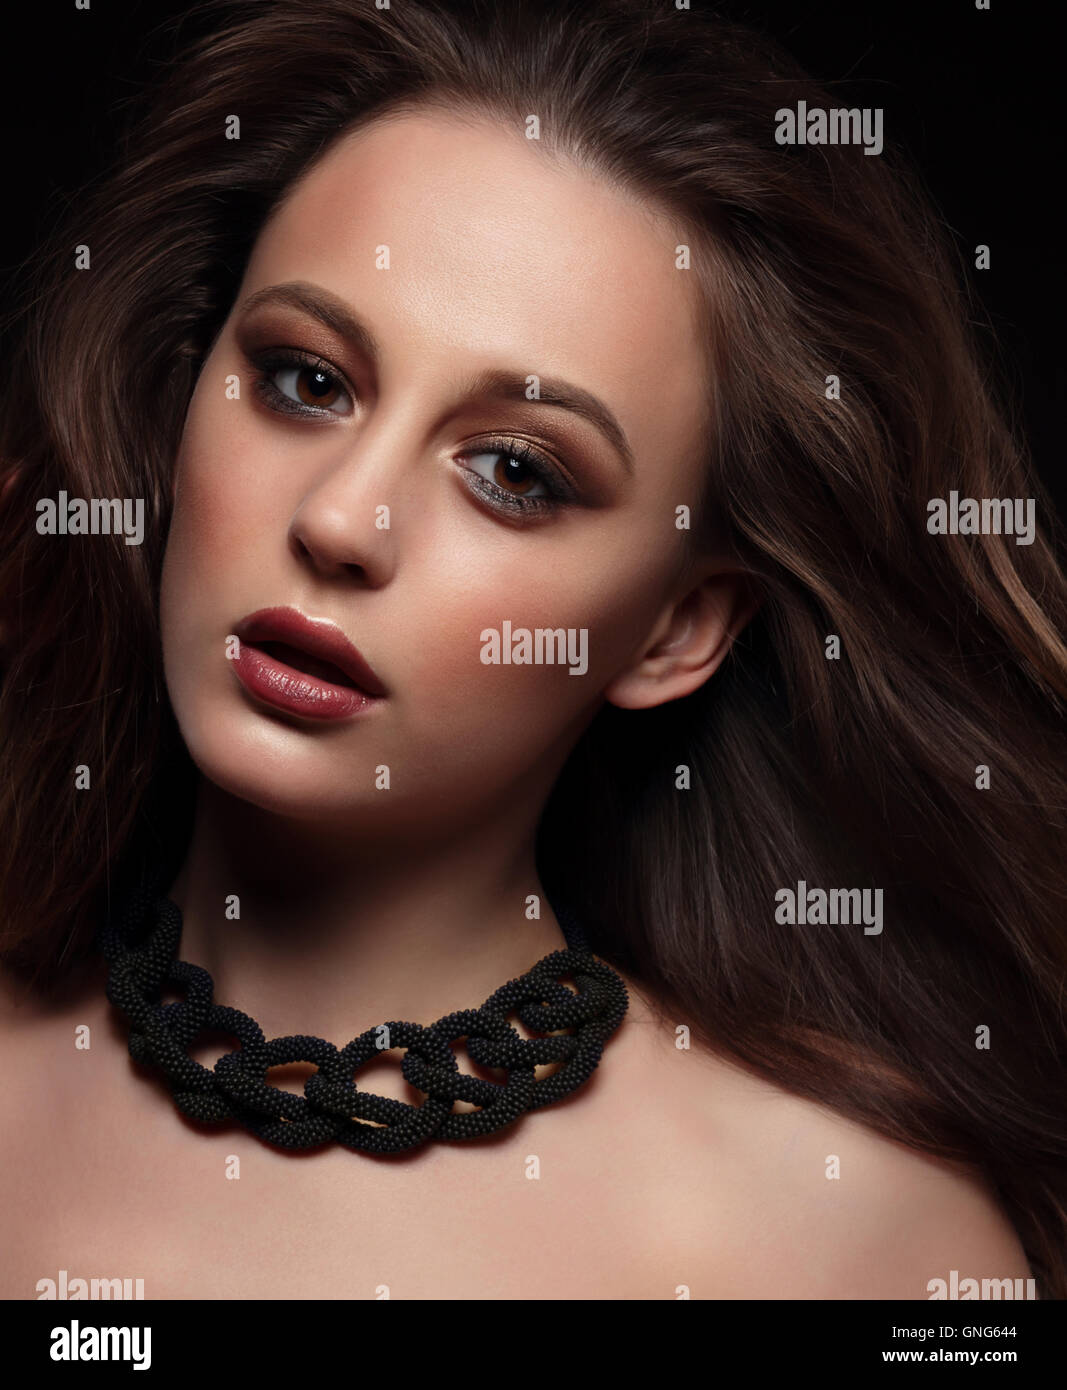 Beautiful young woman close-up portrait. Professional makeup. Stock Photo